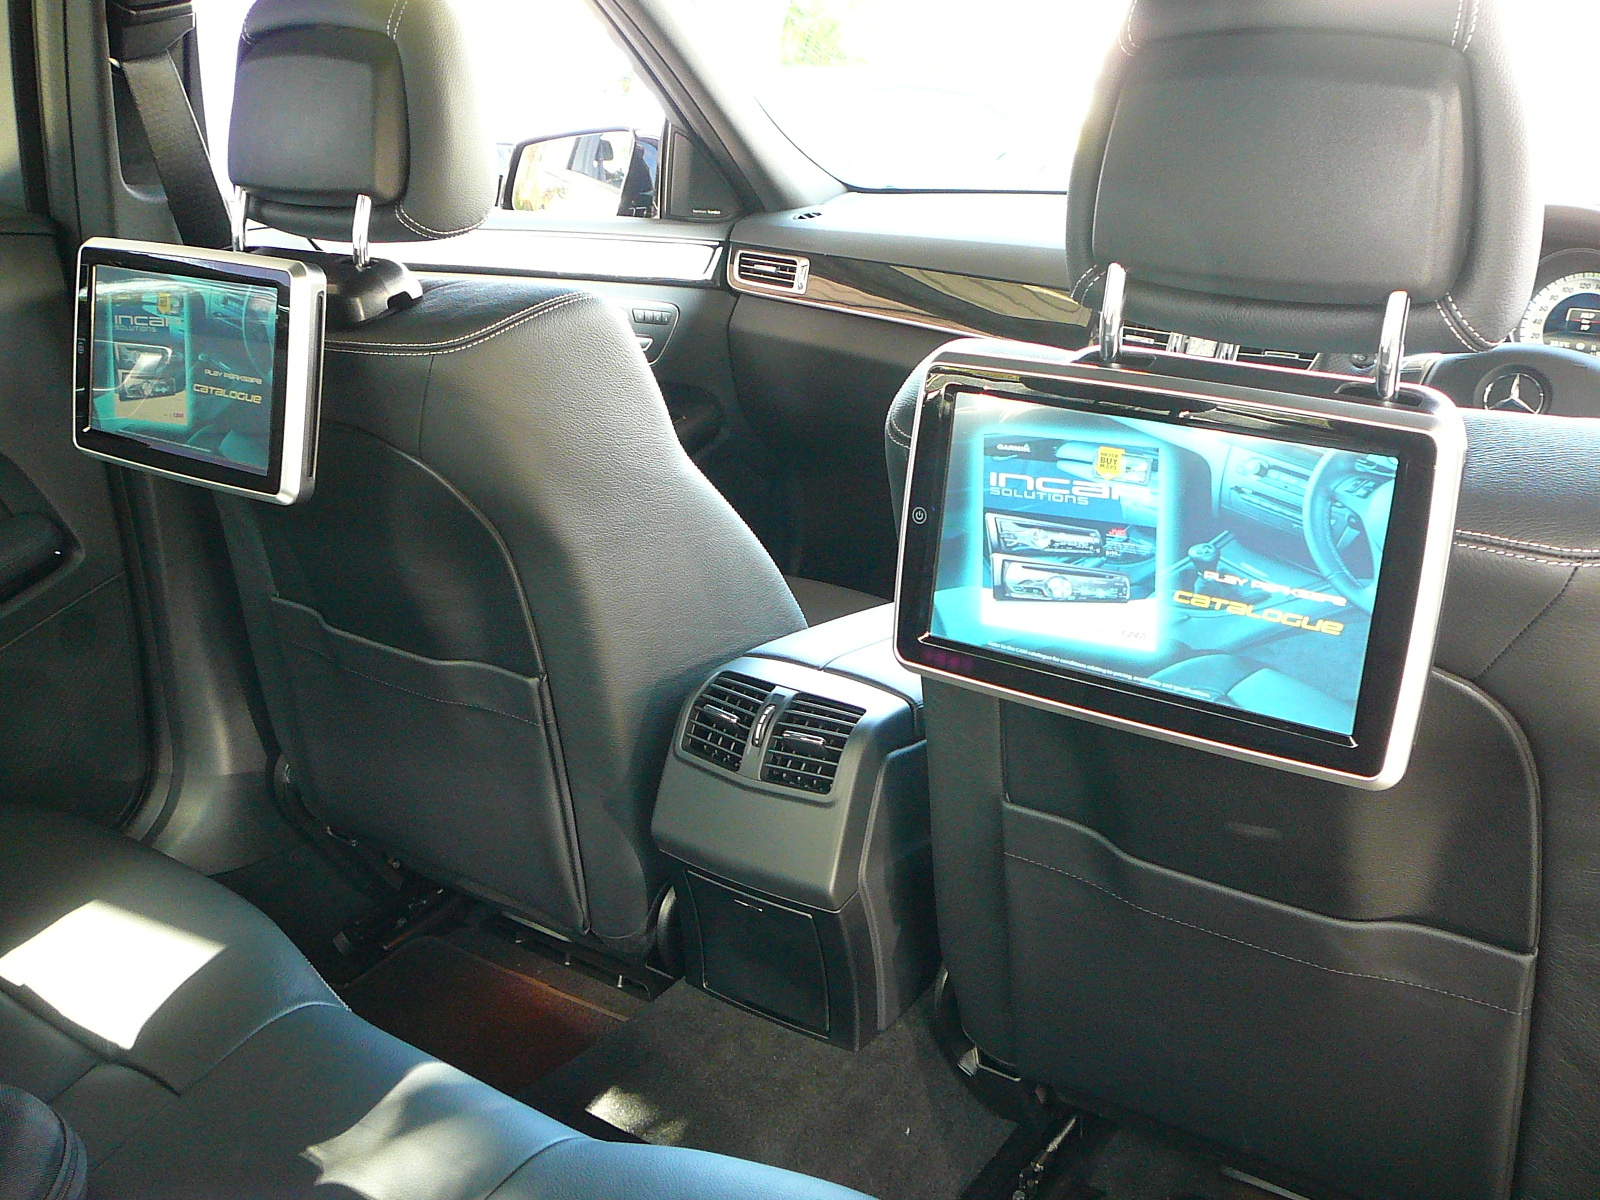 Mercedes Benz E400 2014, Opal 10inch DVD Rear Seat Entertainment Installation